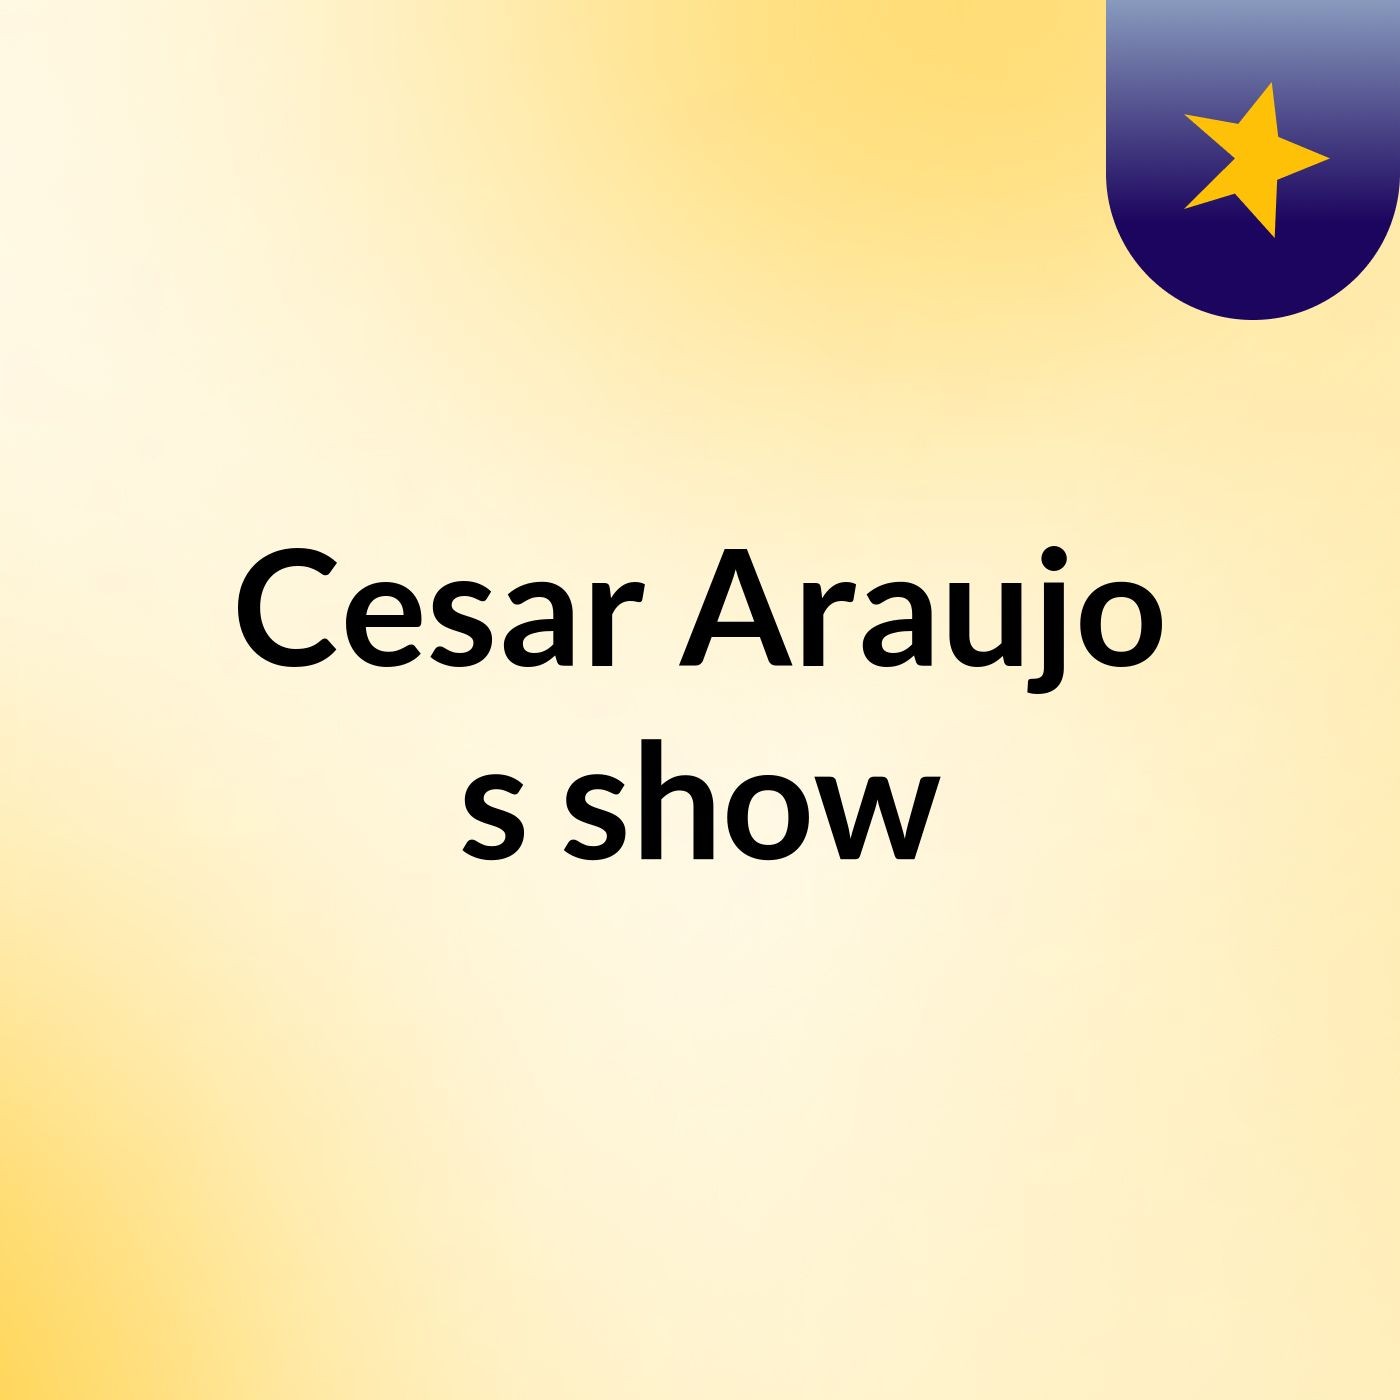 Cesar Araujo's show